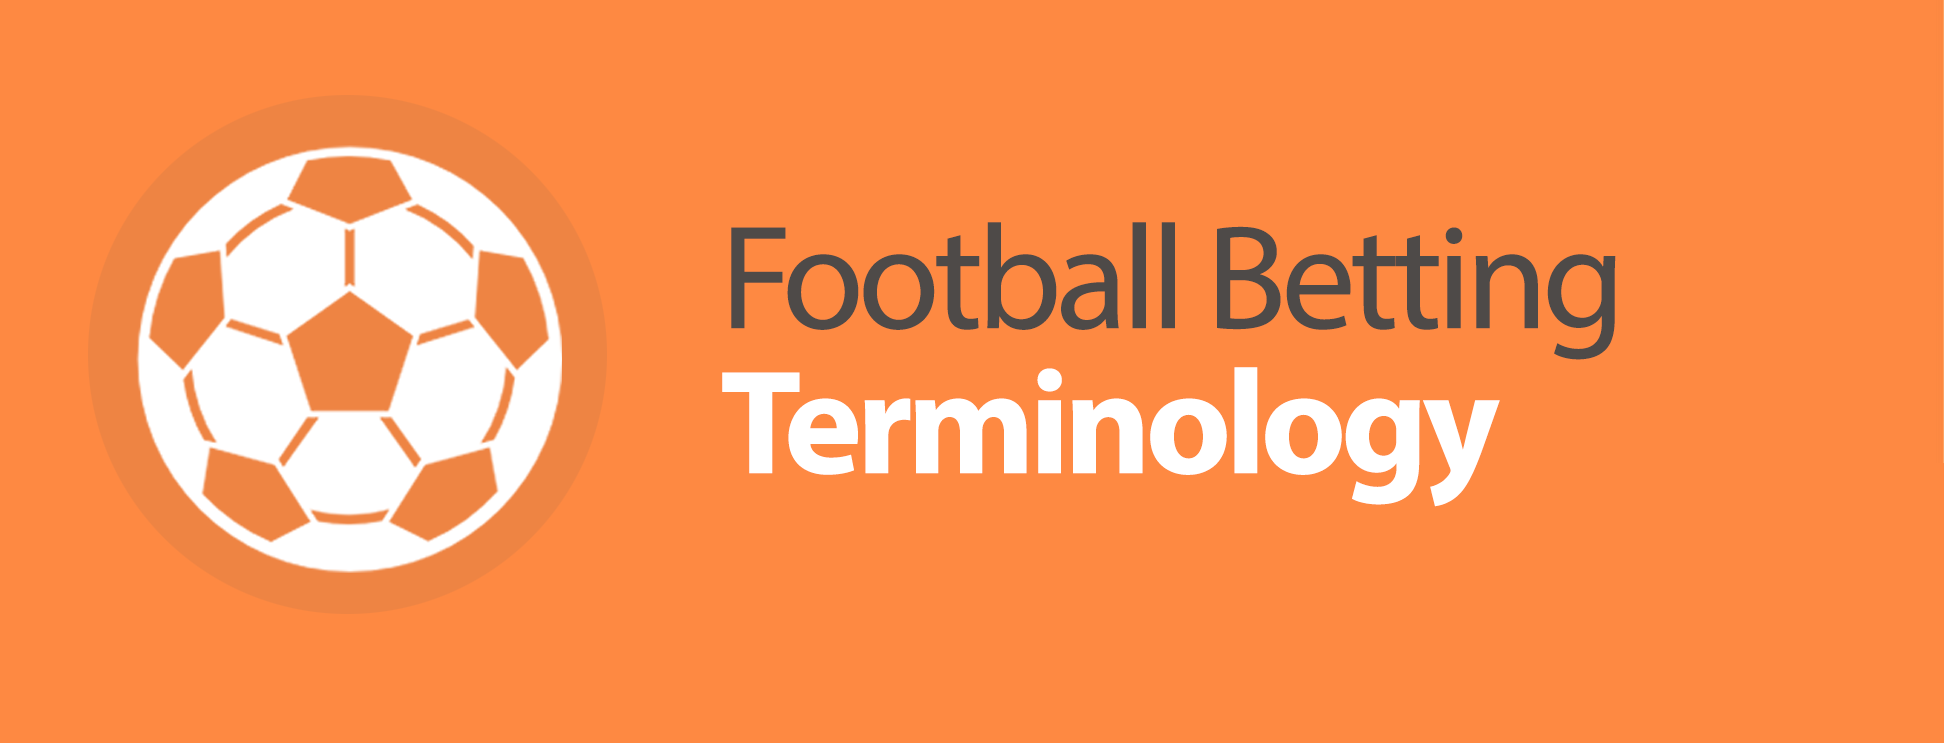 Football Betting Terminology & Glossary